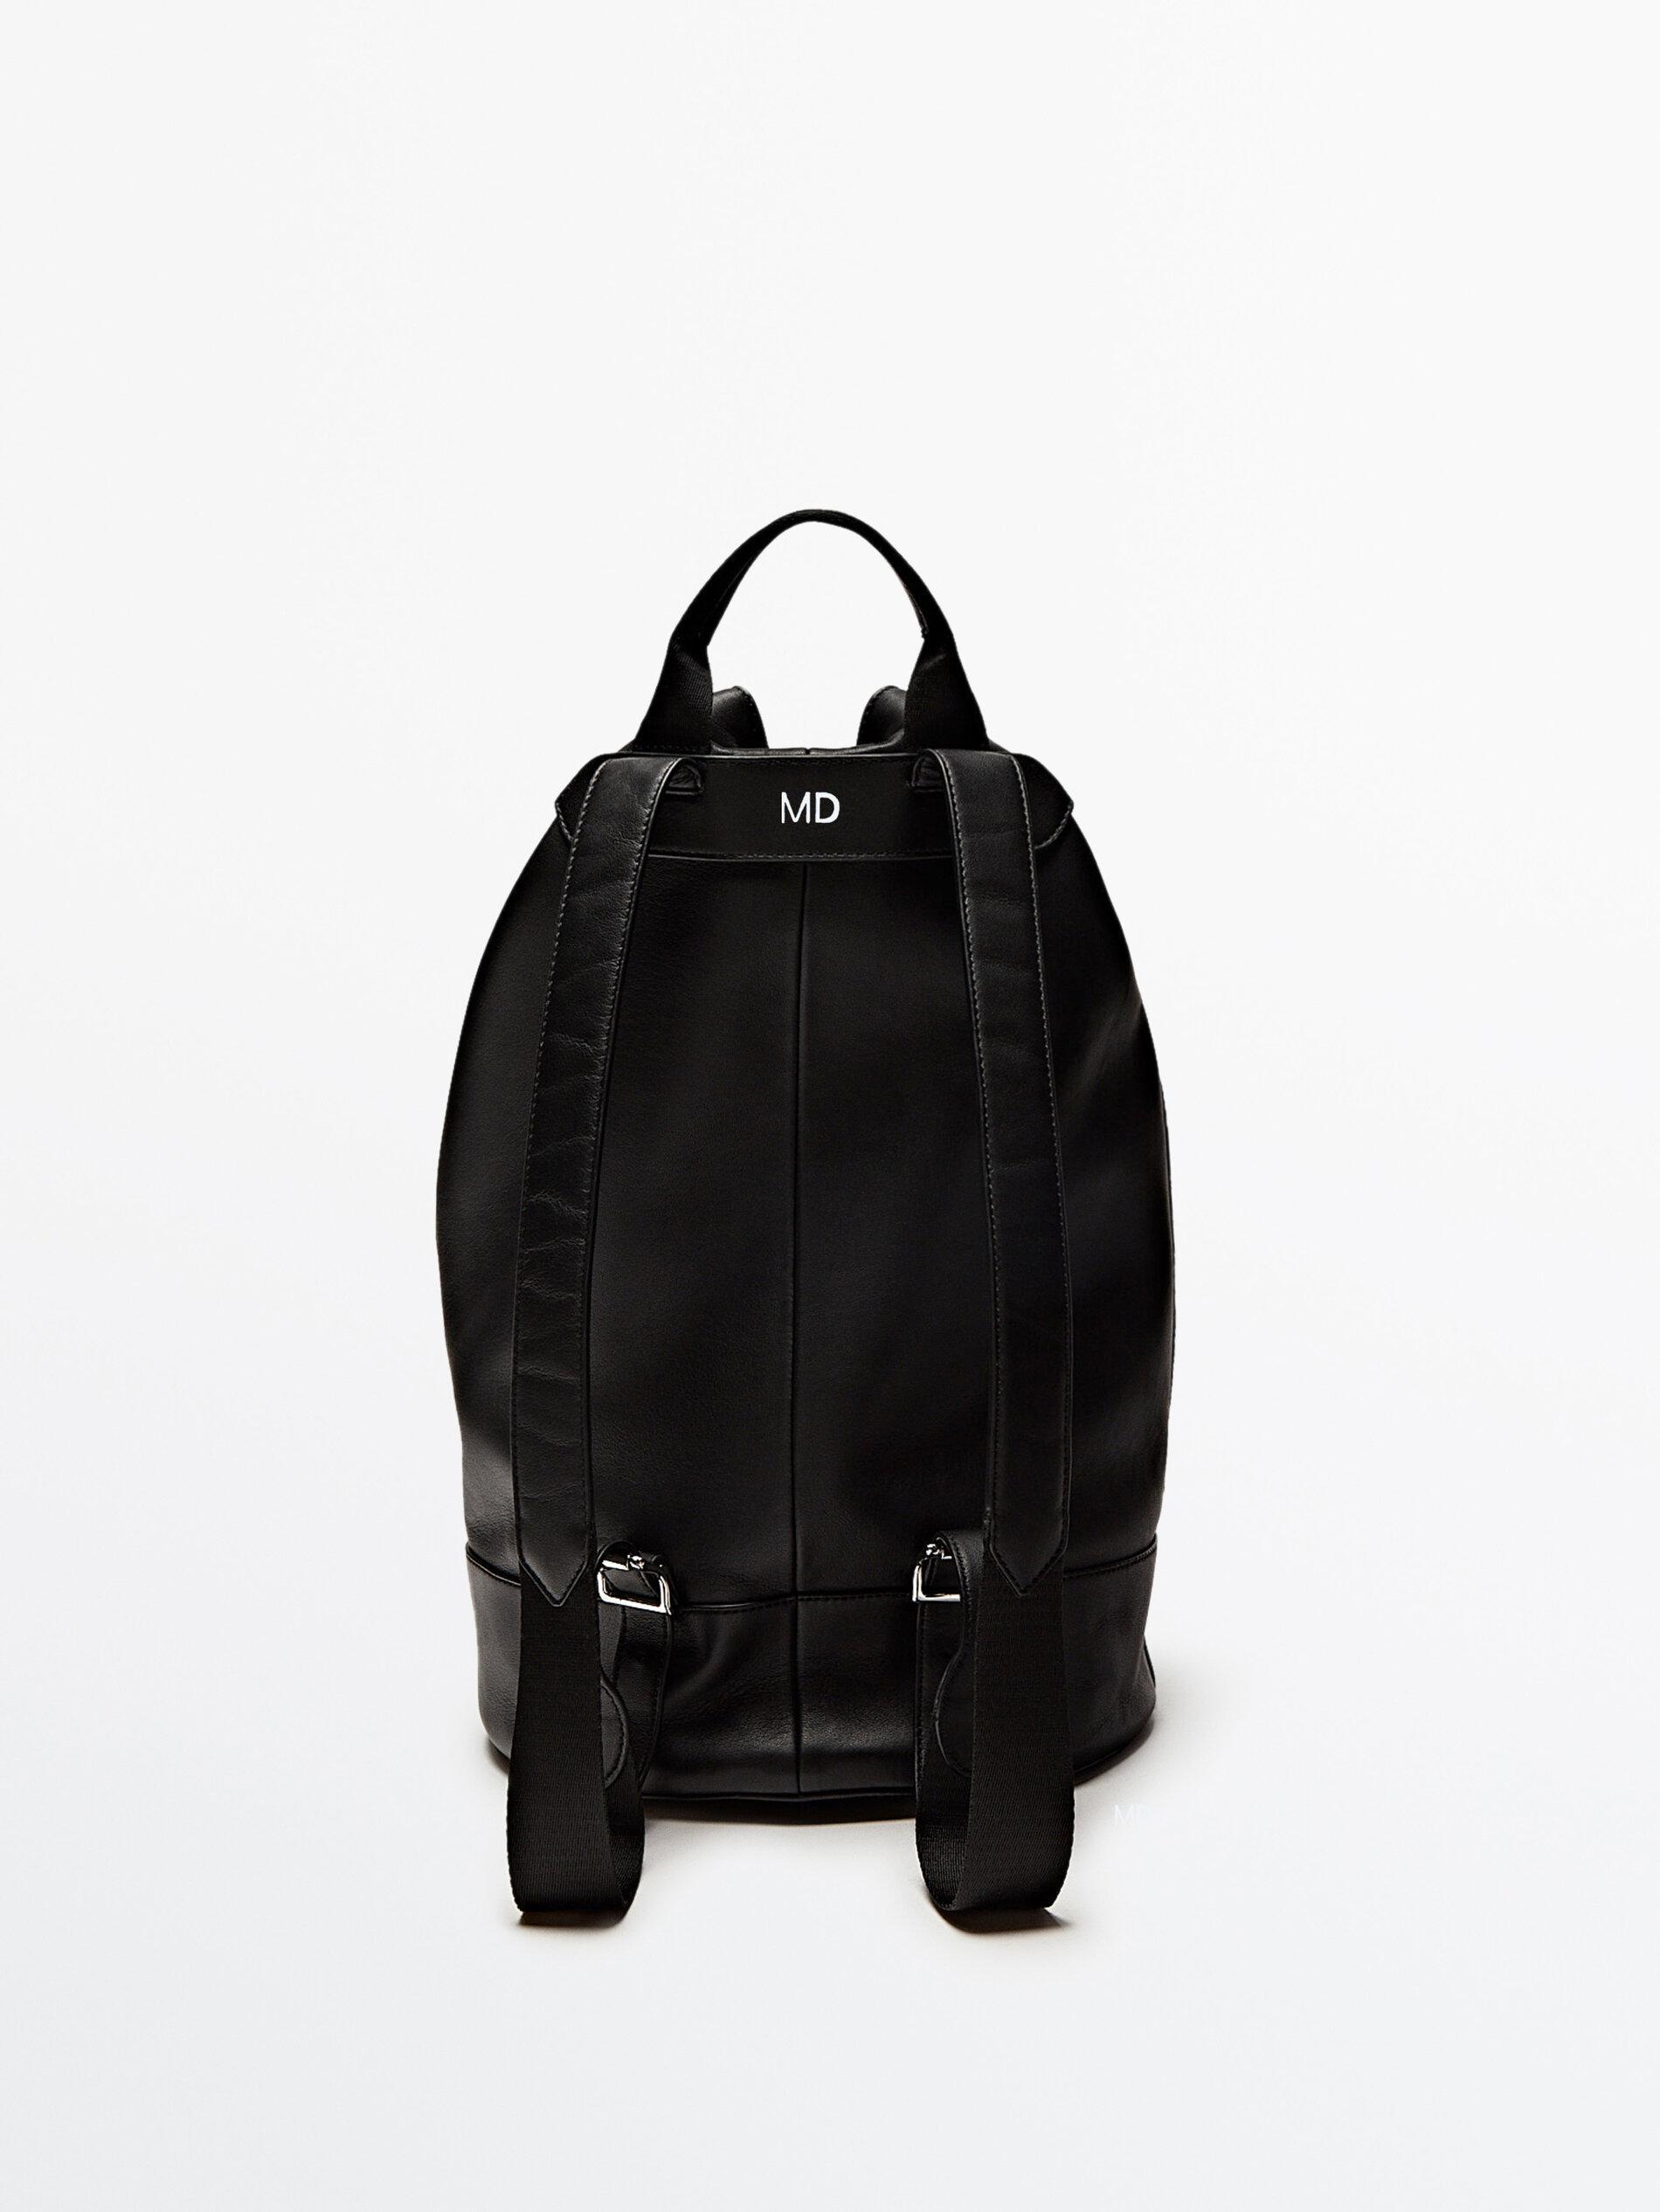 MASSIMO DUTTI Black Leather Backpack for Men | Lyst